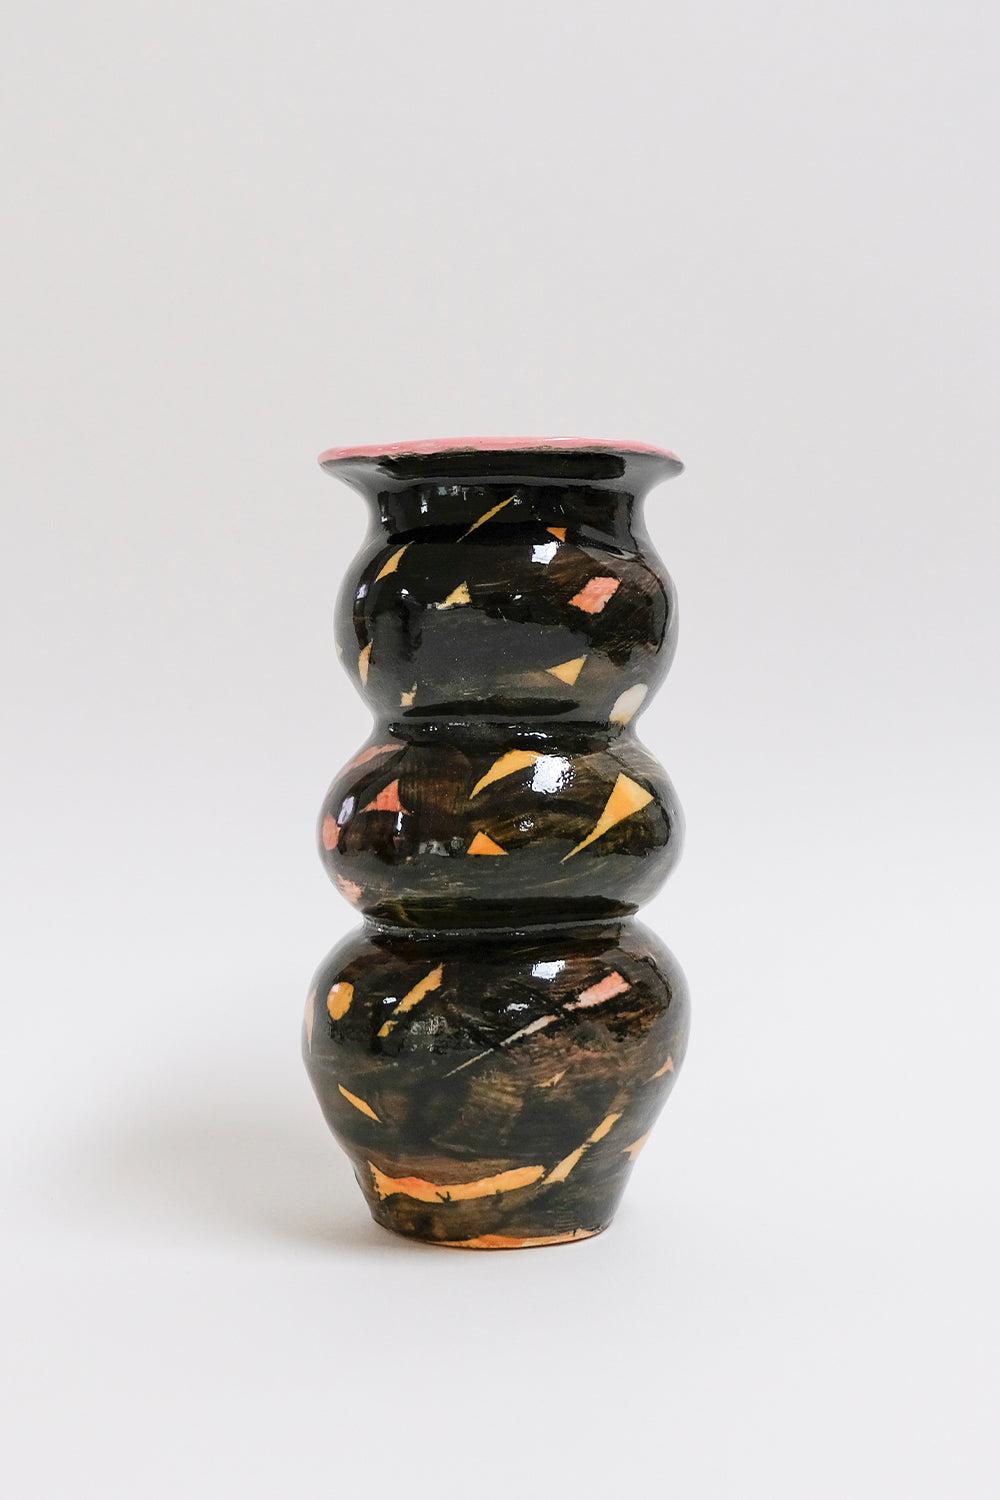 Mur Vessel 3 - contemporary ceramic functional art vase, wheel thrown hand built